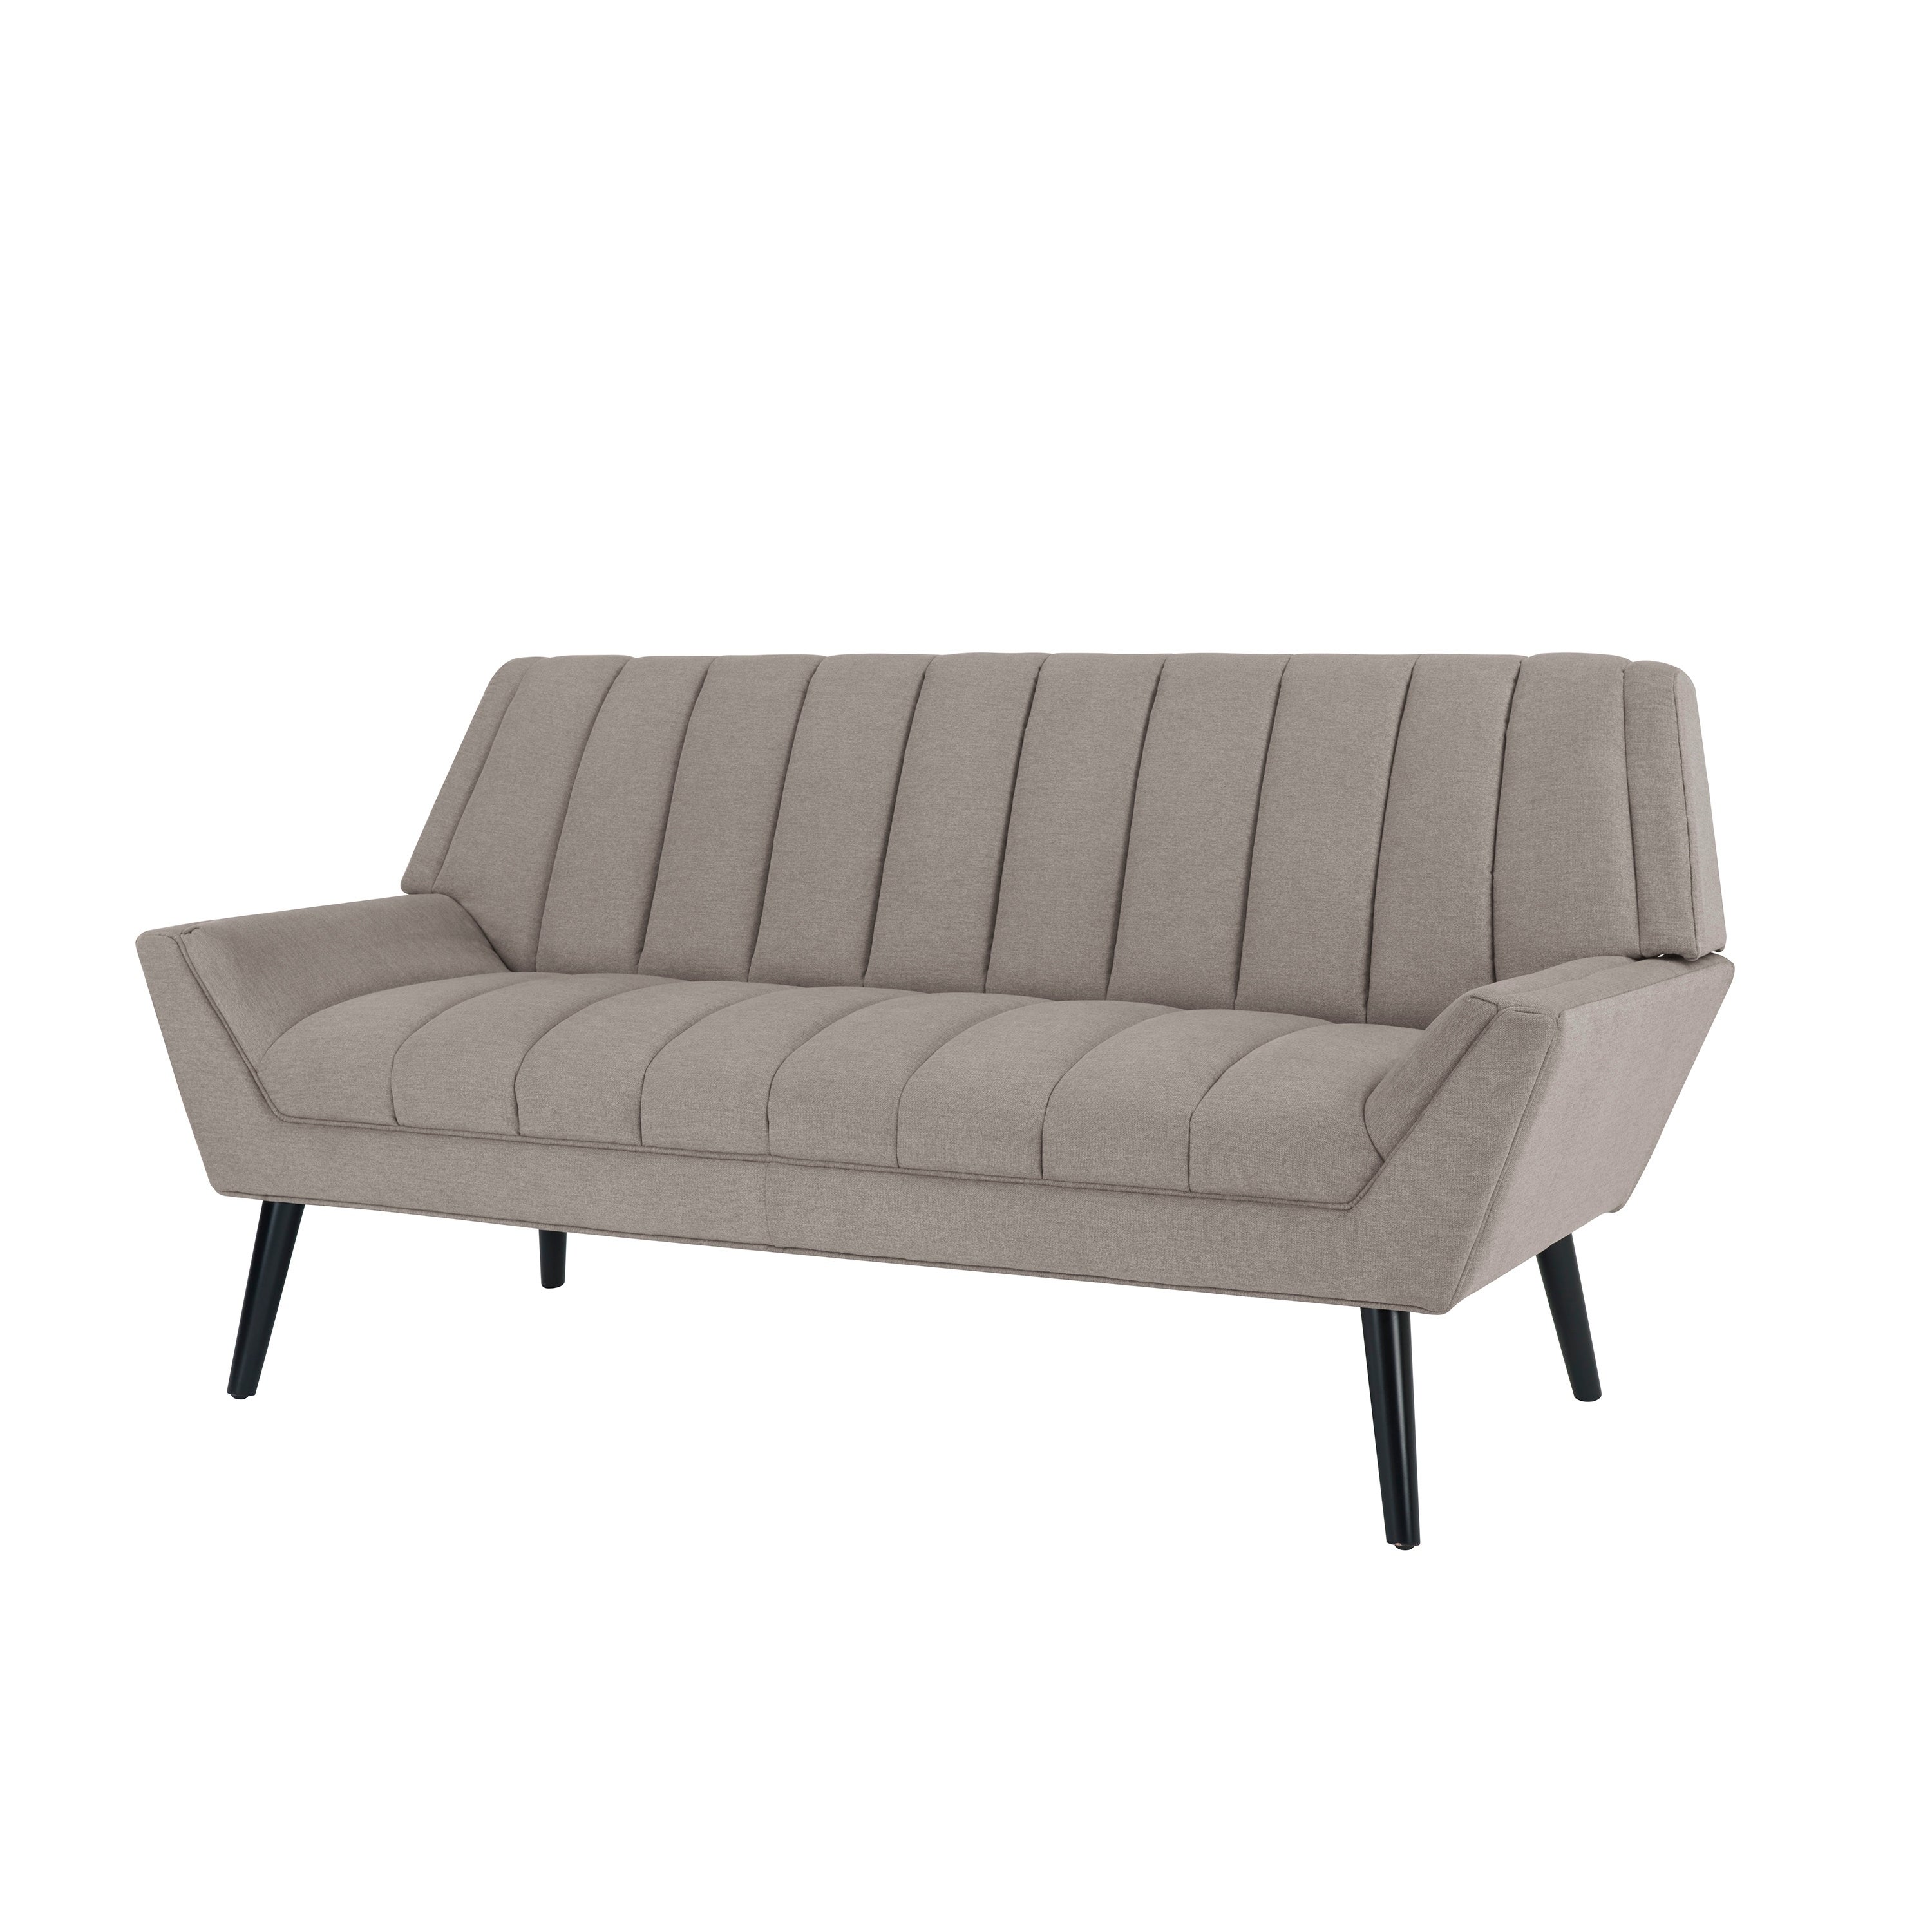 T/T Kingbird Furniture Company Brand Green Sectional Sofa Factory 7